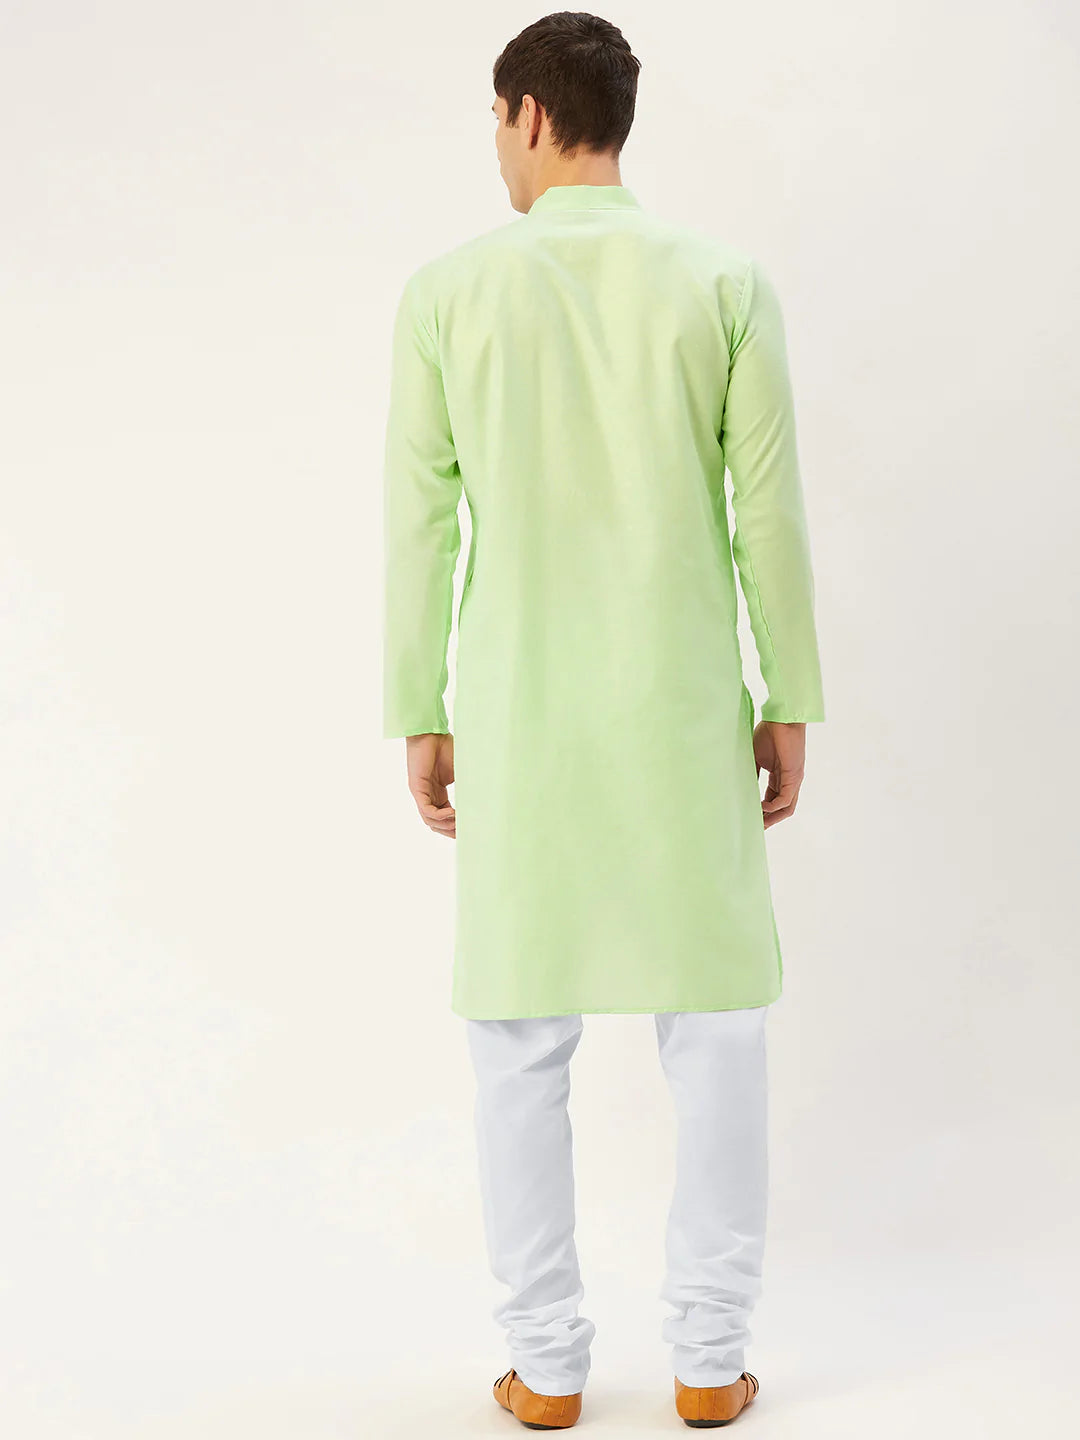 Jompers Men's Lime Cotton Solid Kurta Payjama Sets ( JOKP 611 Lime )